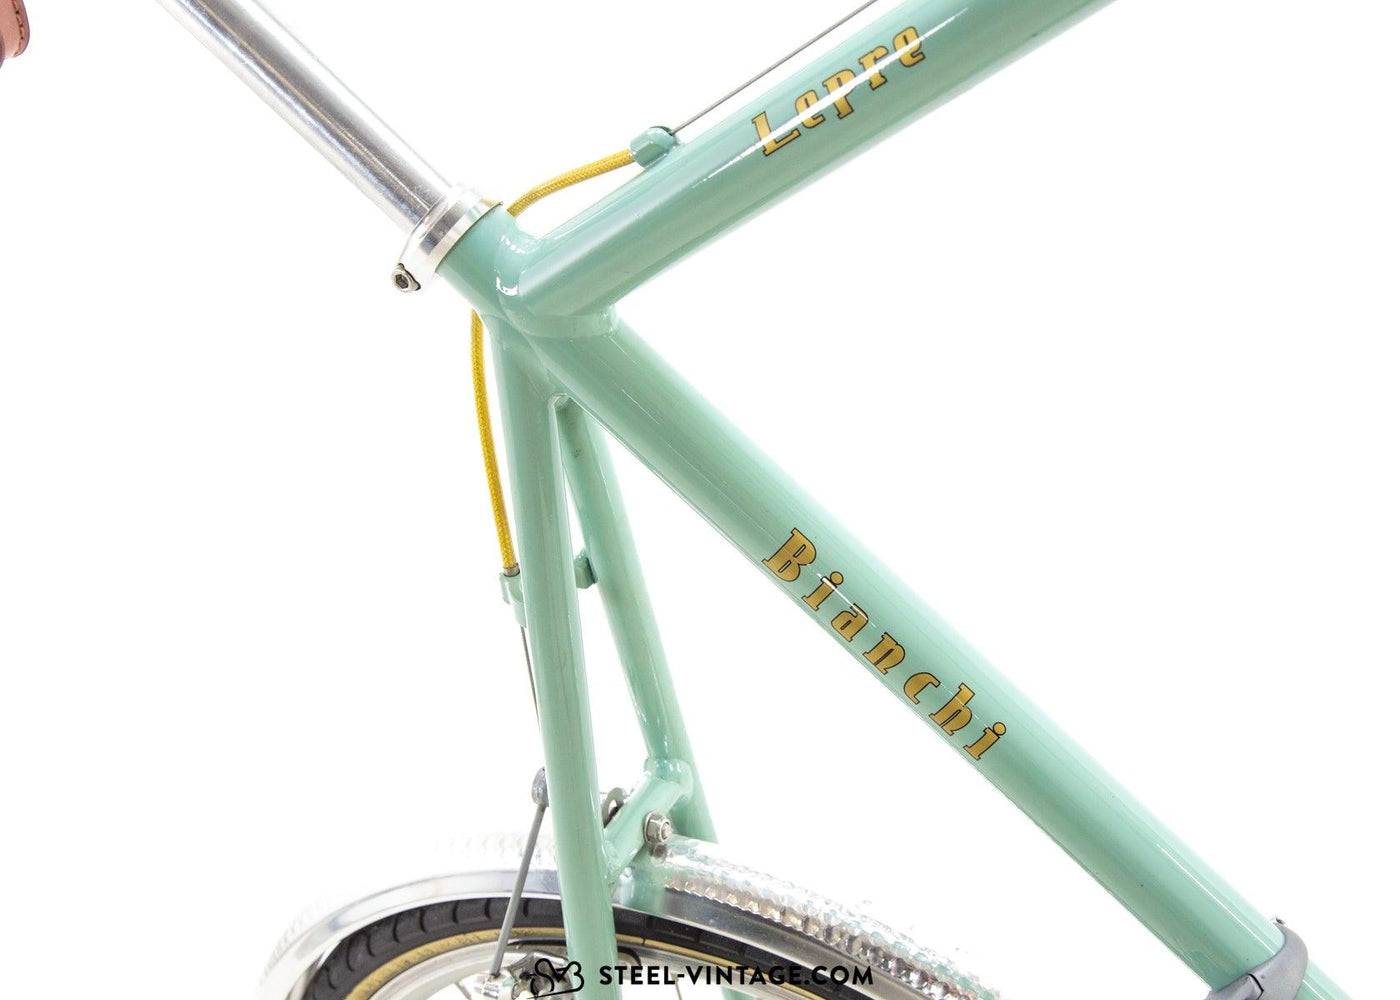 Bianchi Lepre D10 Minivelo Urban Bicycle - Steel Vintage Bikes